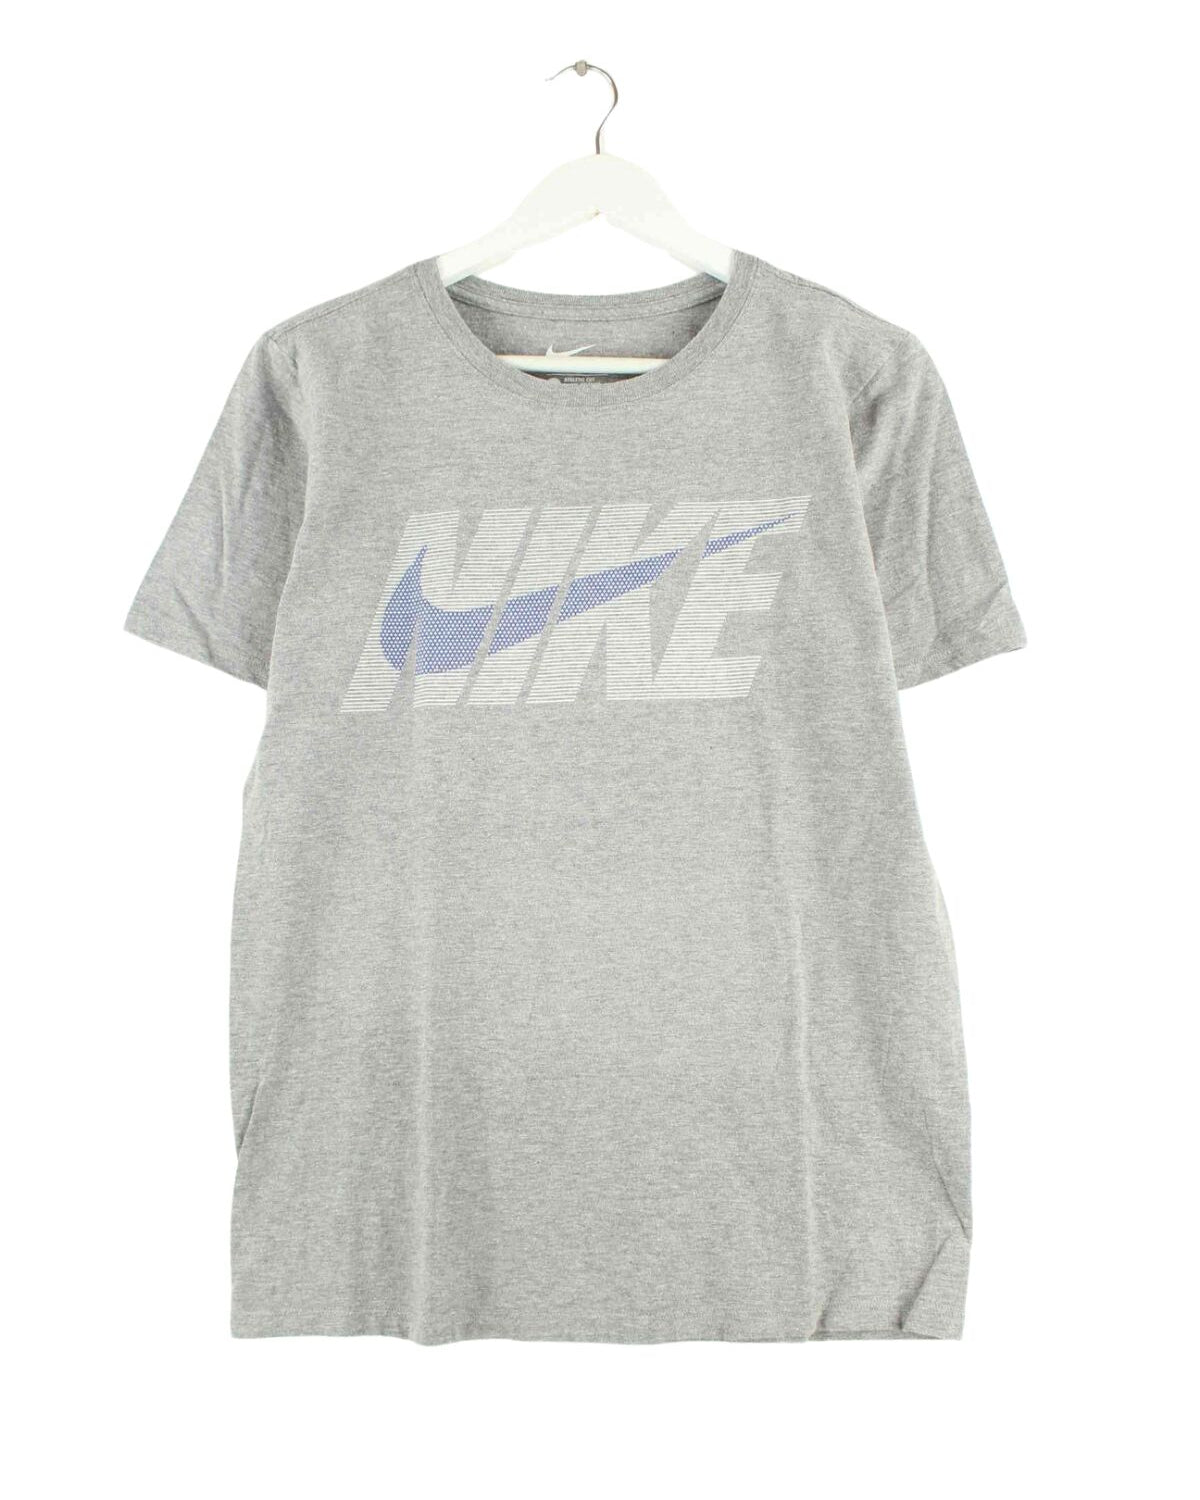 Nike Print T-Shirt Grau S (front image)